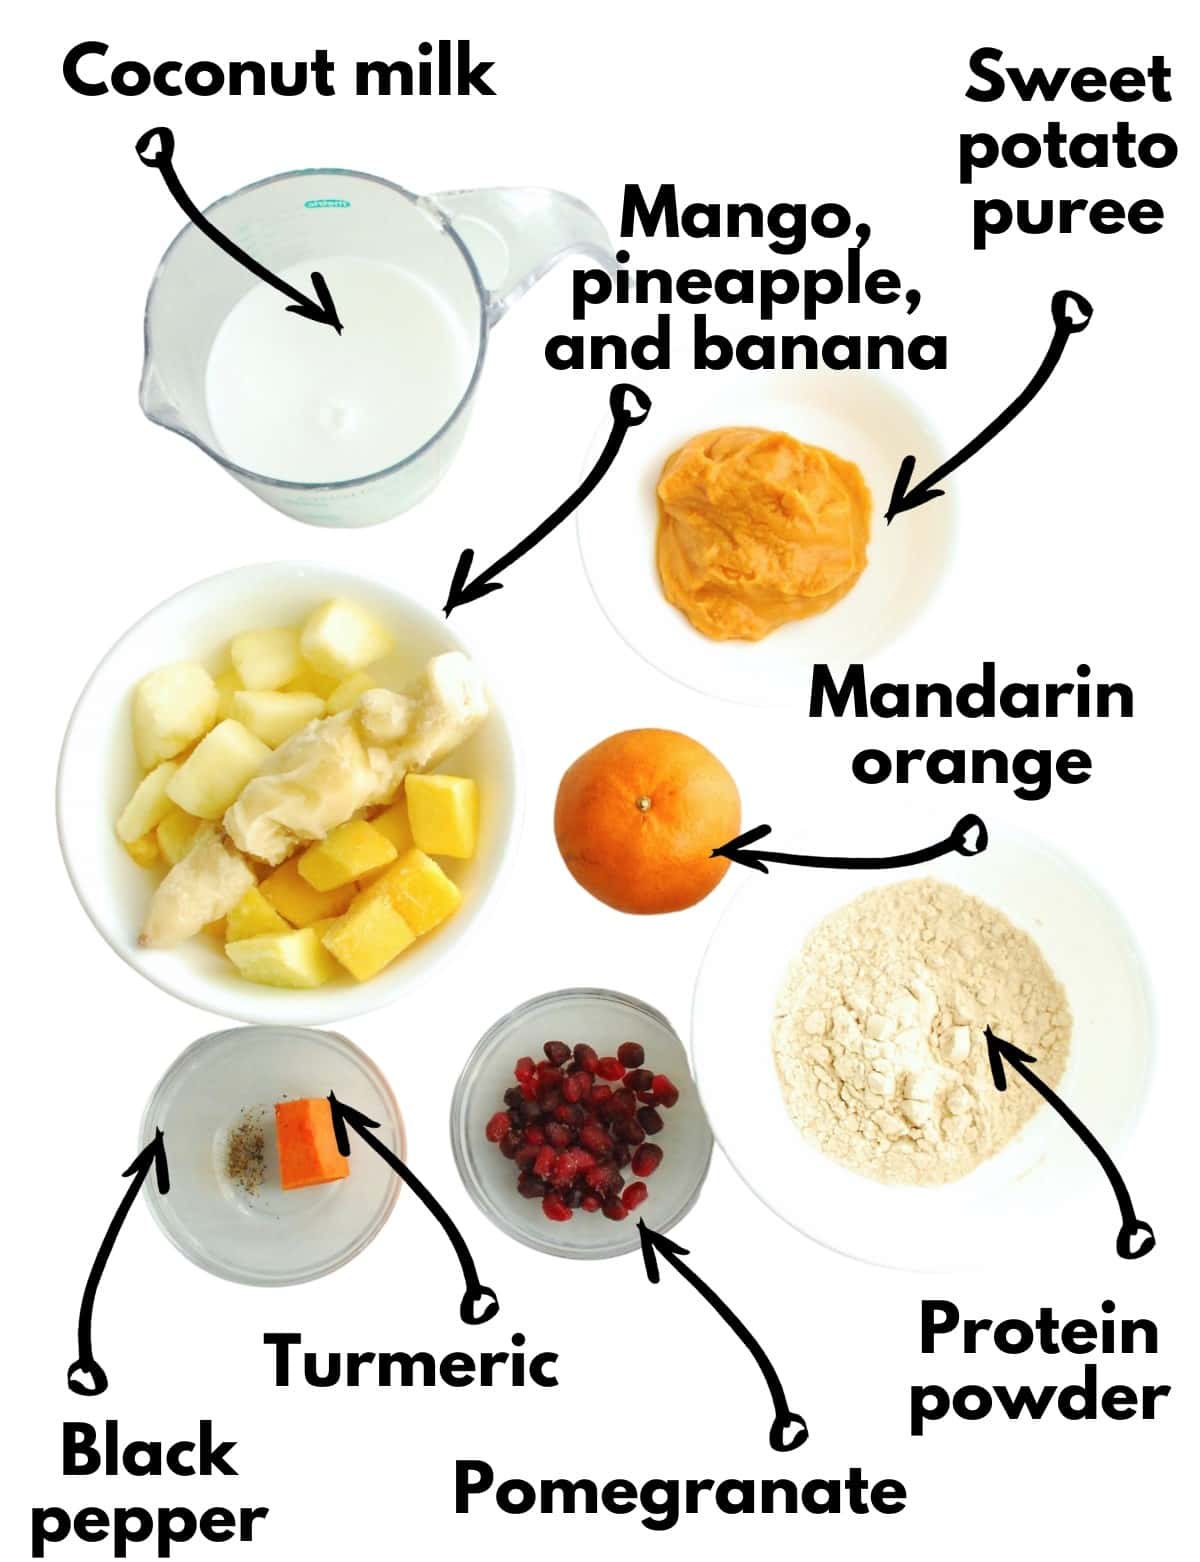 Coconut milk, mango, pineapple, banana, mandarin orange, sweet potato puree, protein powder, turmeric, black pepper, and pomegranate.